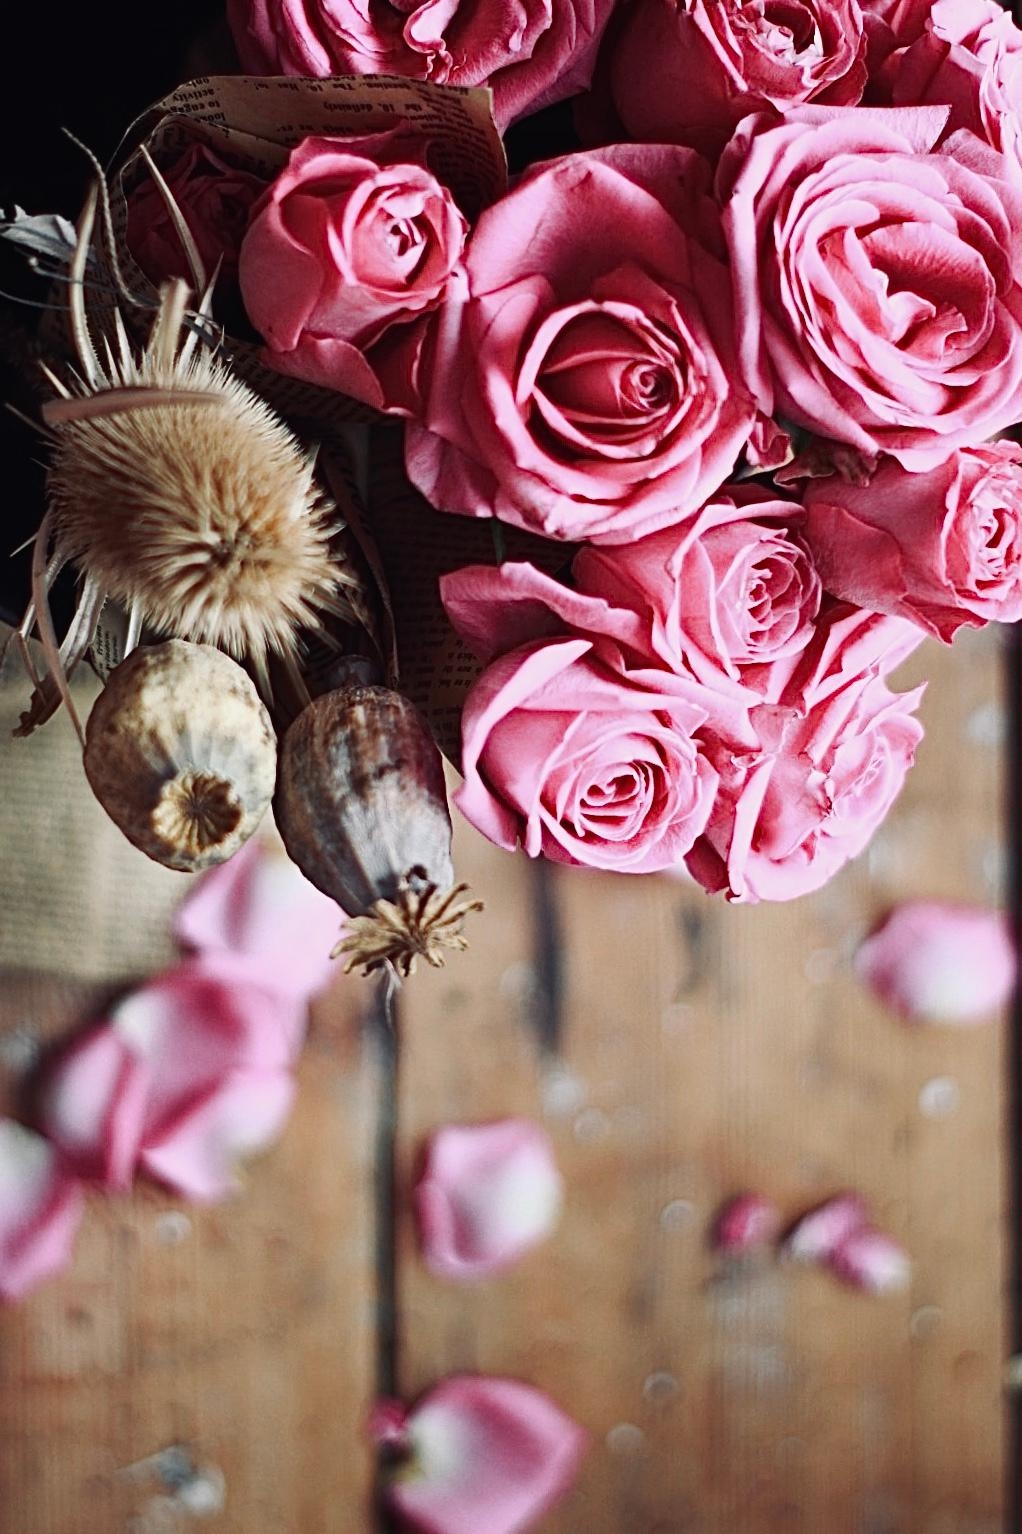 Flowers for you. ❤️ #freshflowers #flowers #dekoidee #happyfriday #couchliebt 